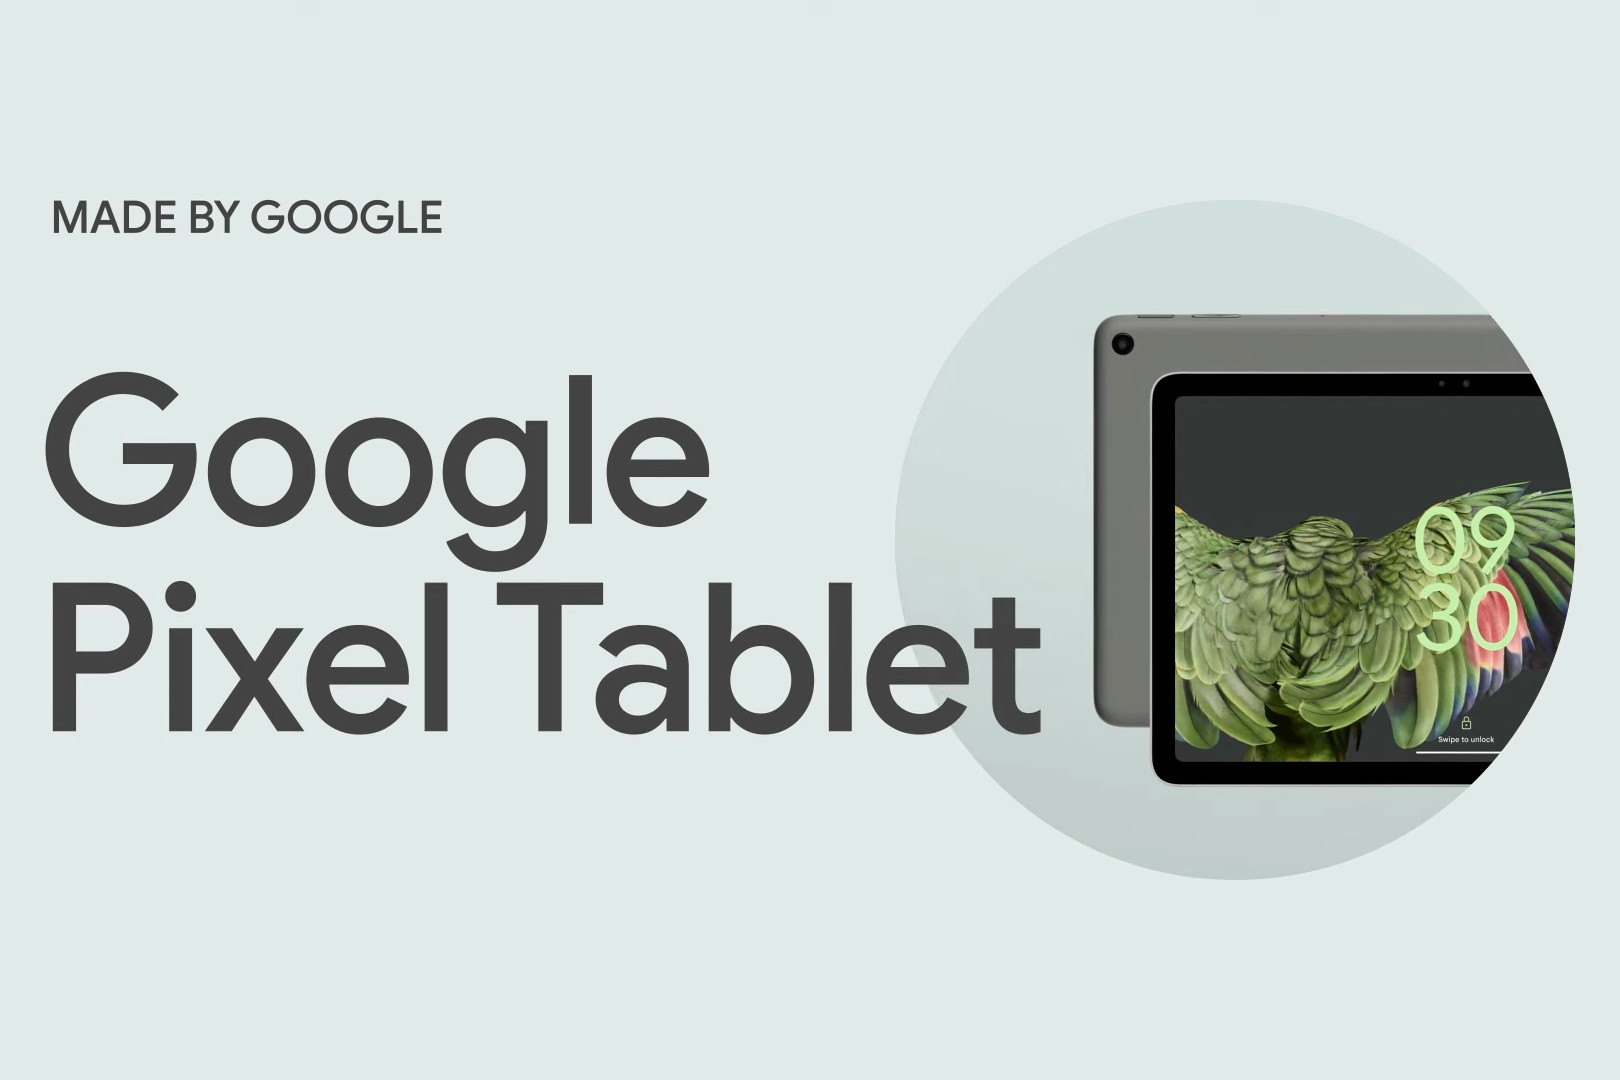 Pixel Tablet la tablette de Google sera différente de l'iPad